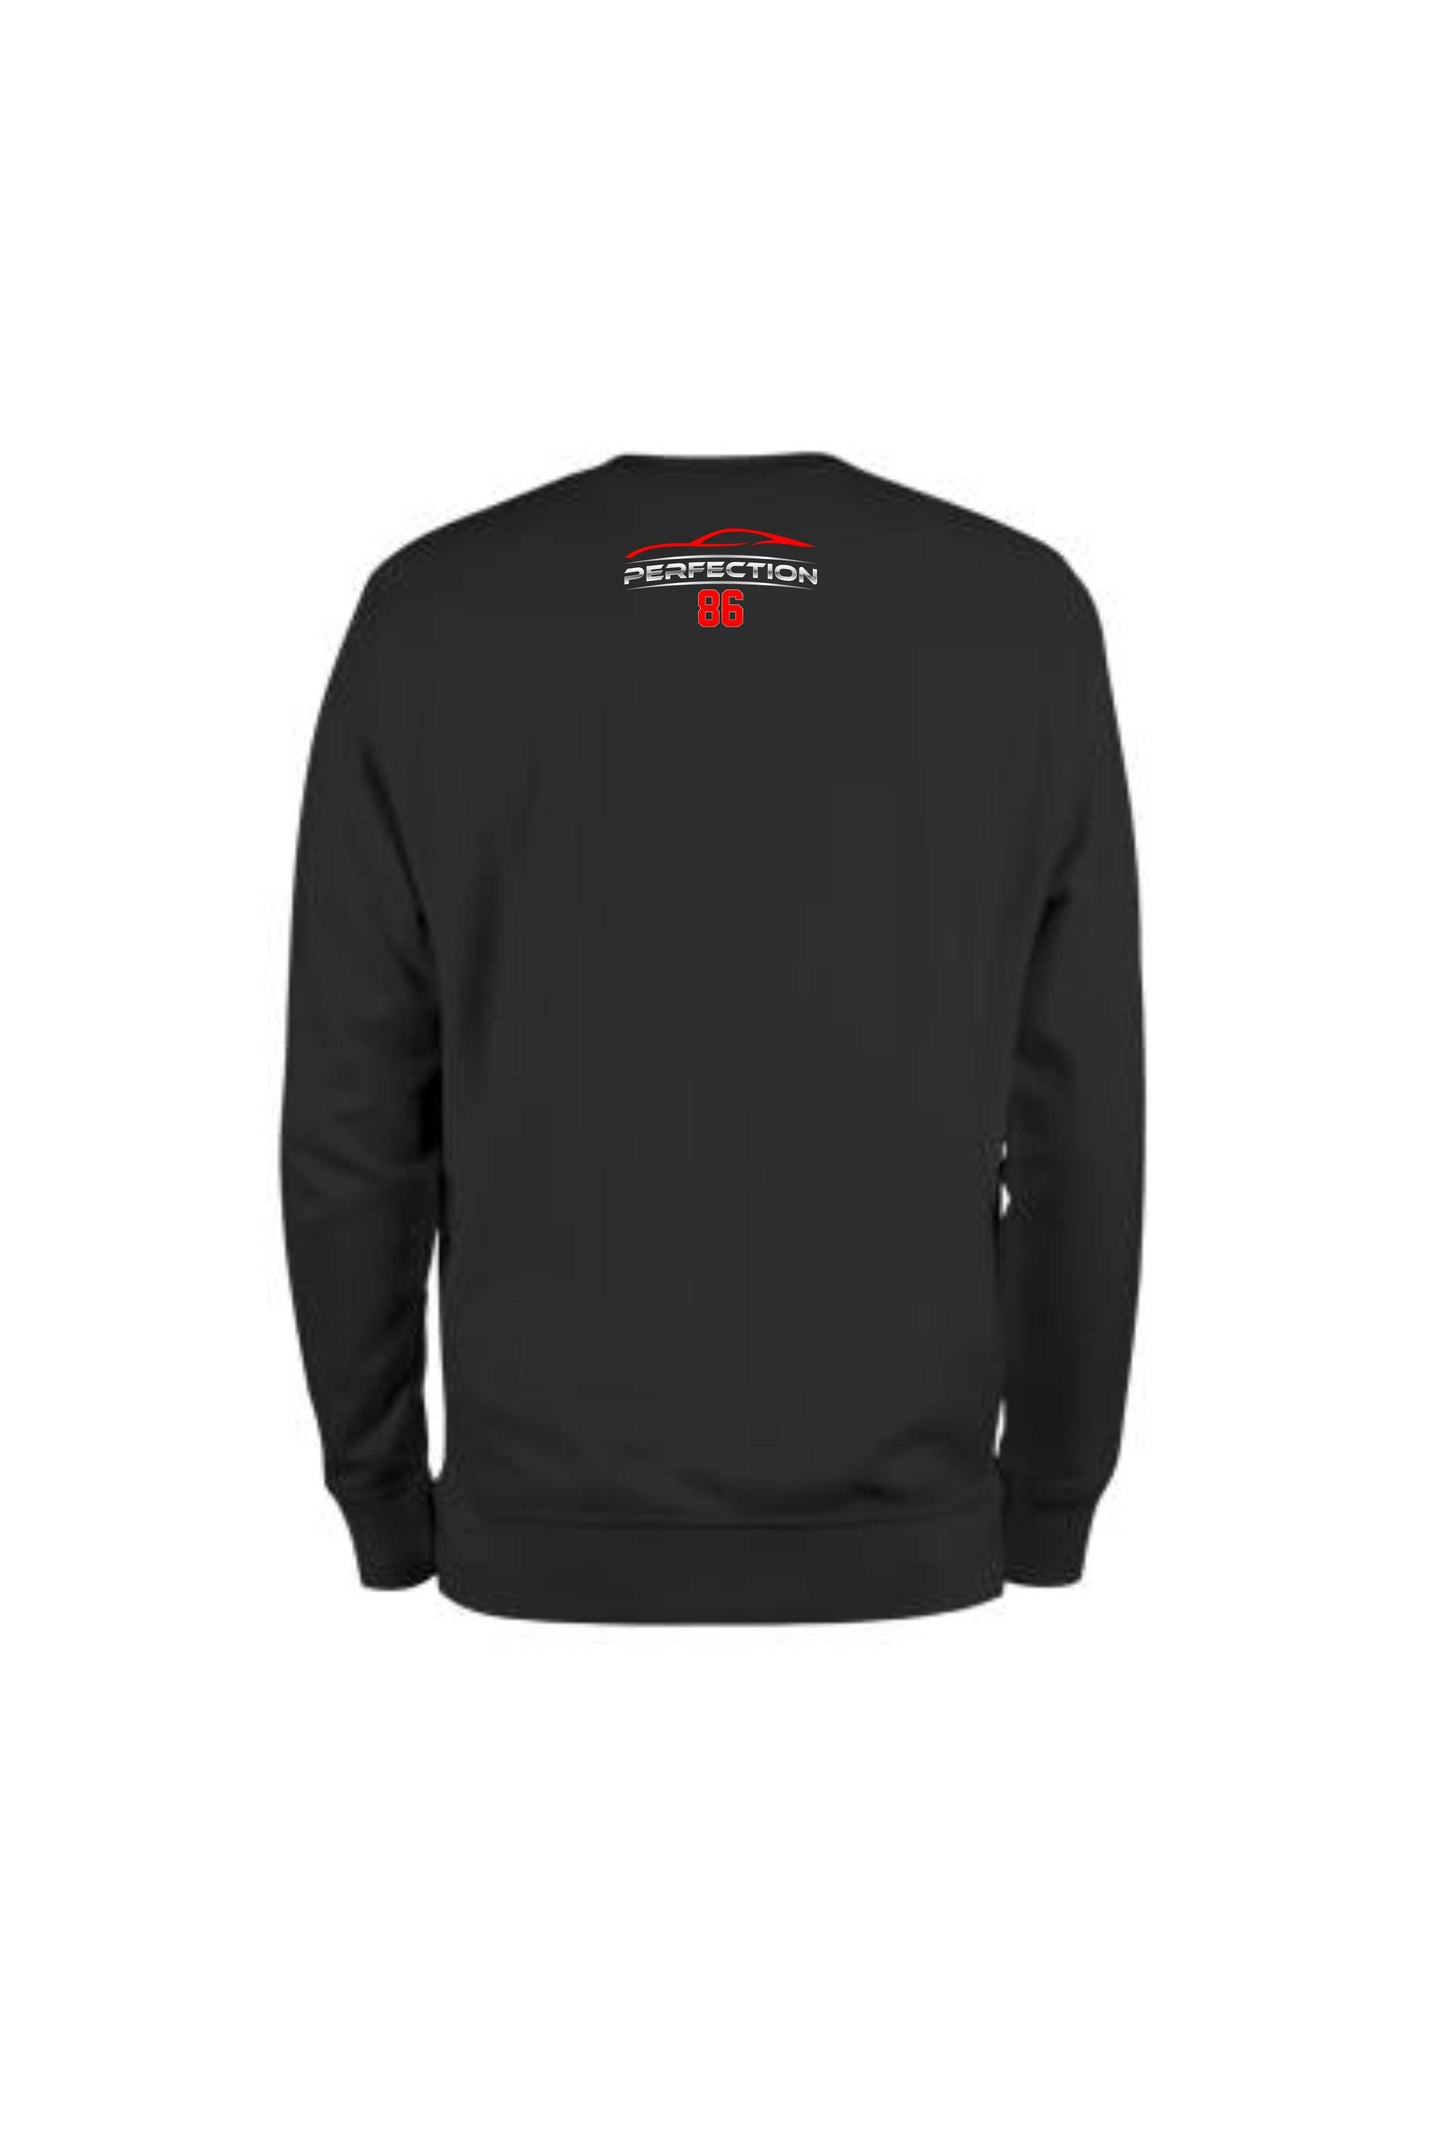 ''Perfection86 E30'' Sweater